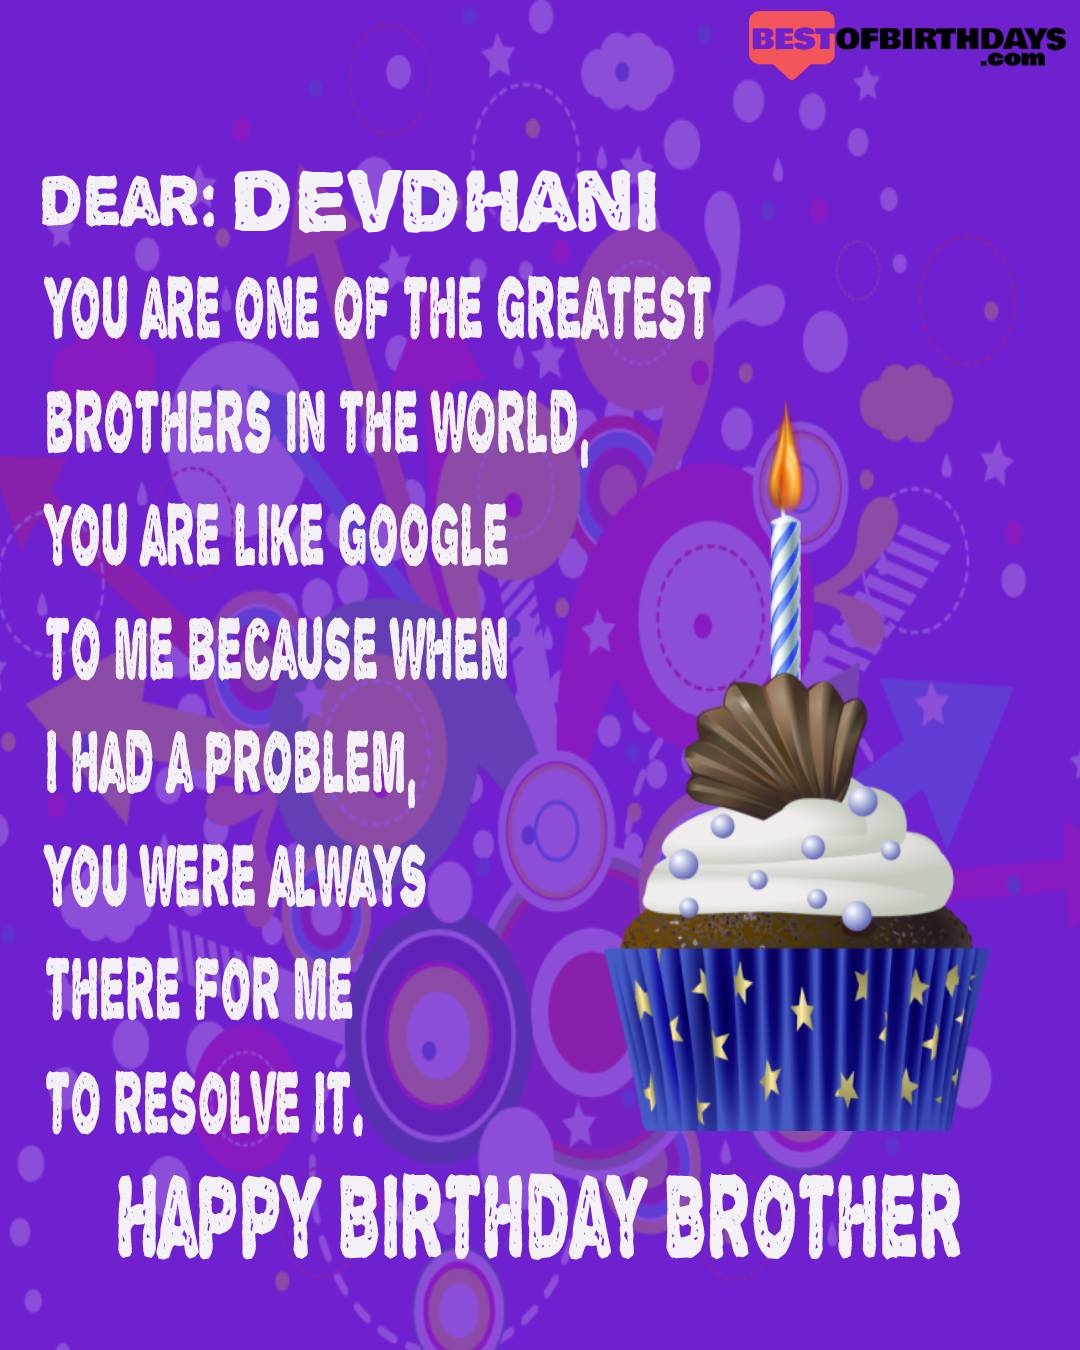 Happy birthday devdhani bhai brother bro